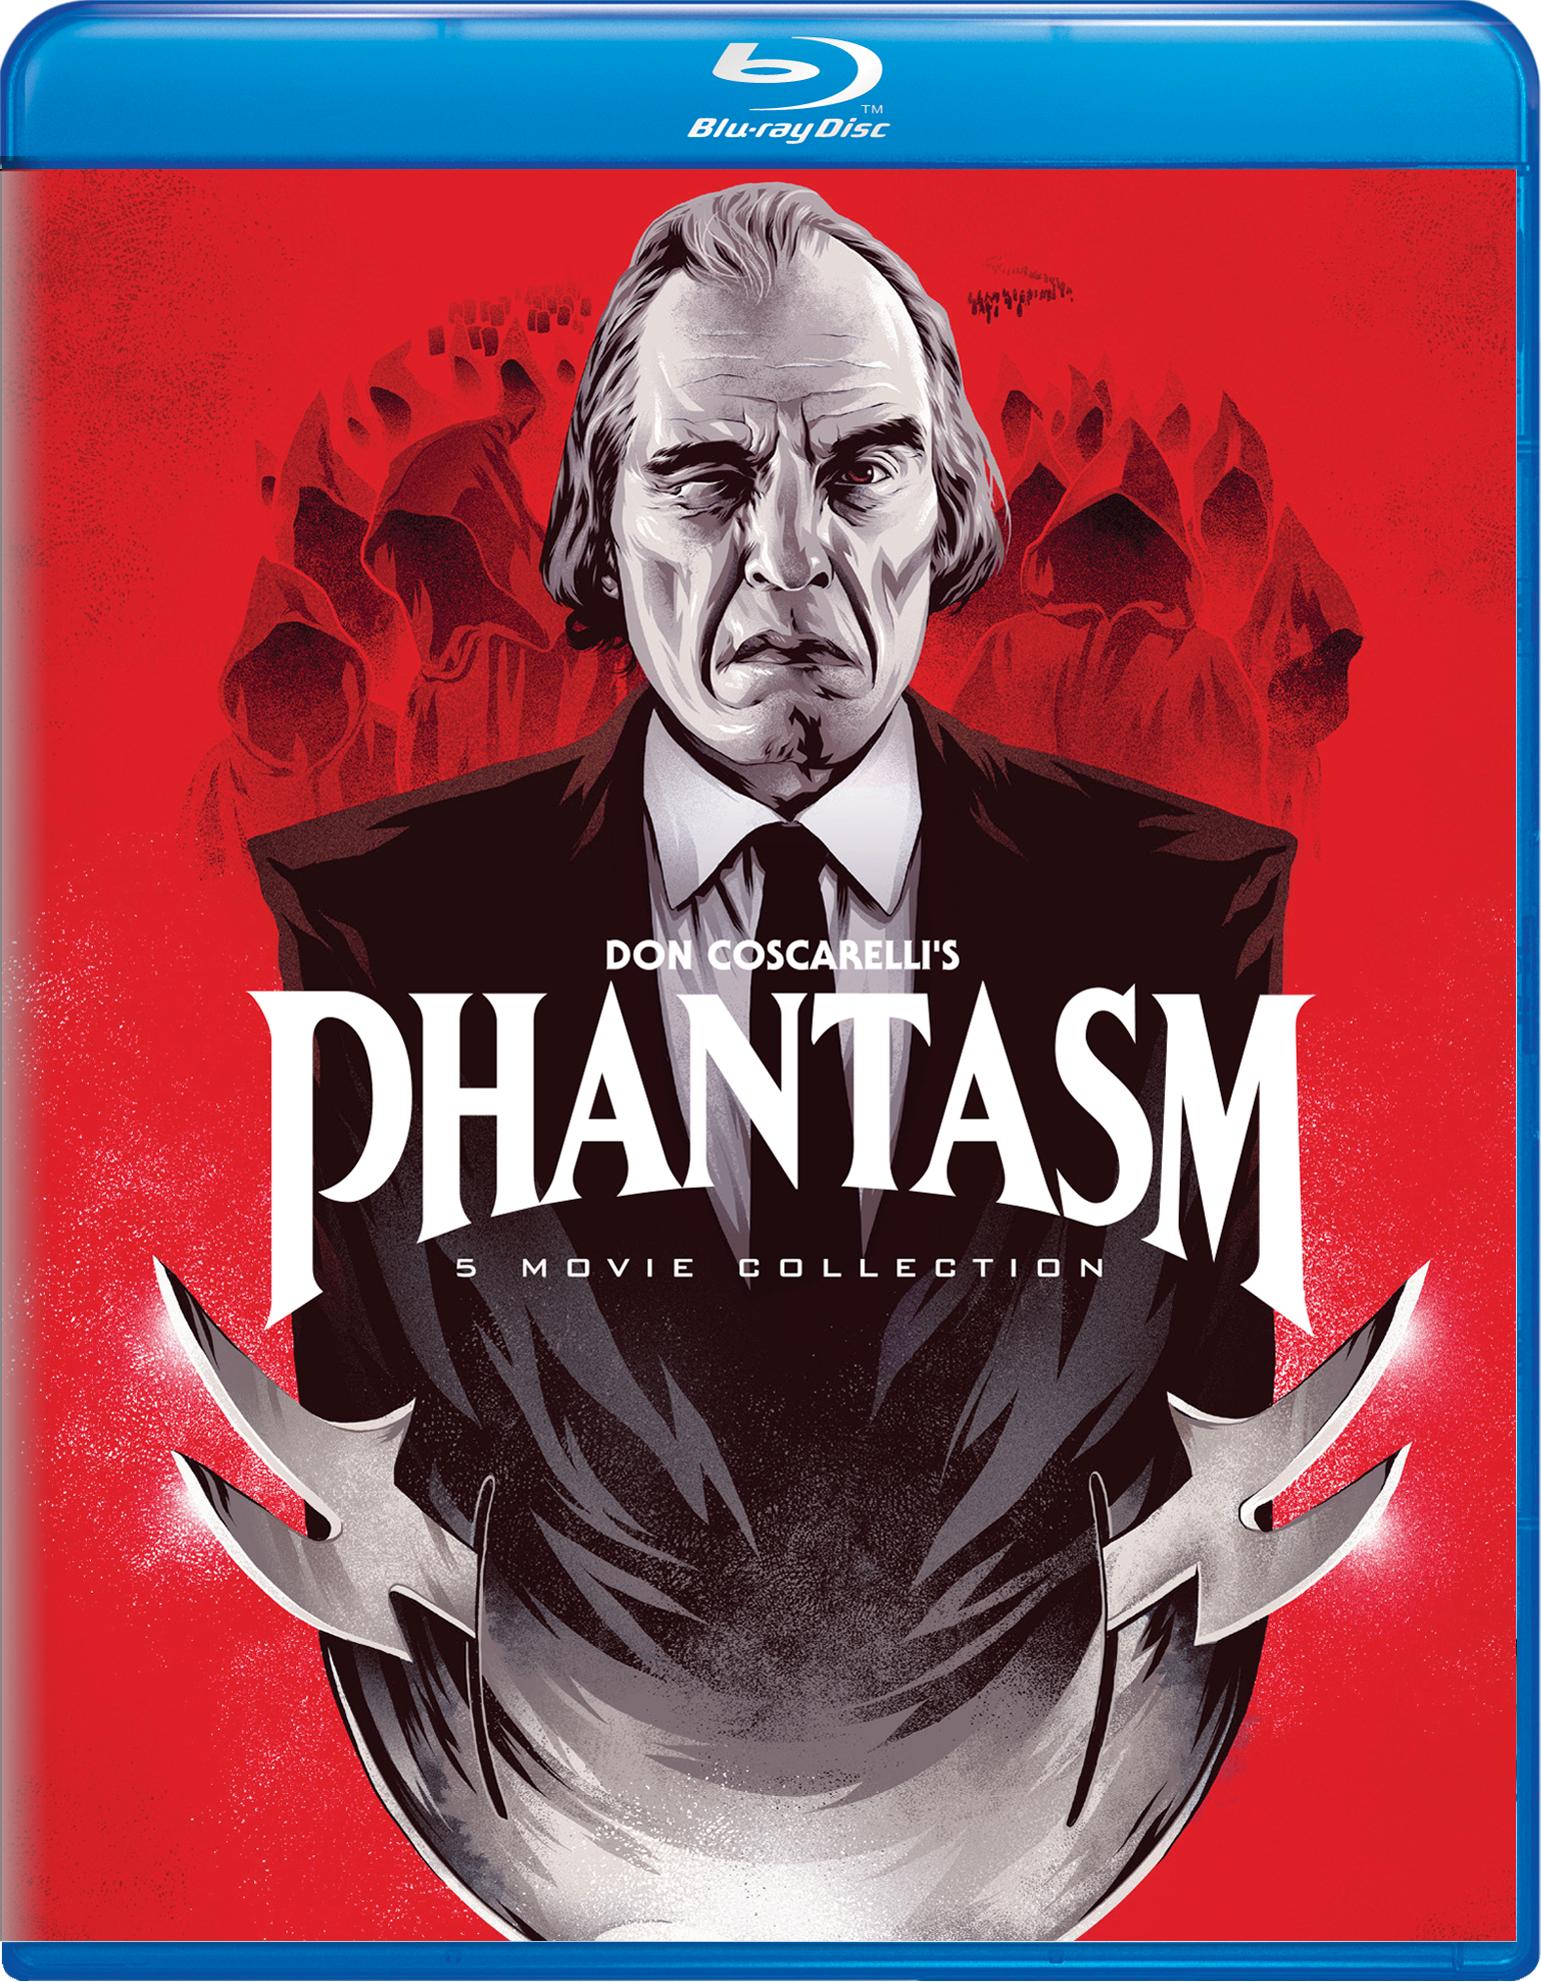 Phantasm Collection 1-5 (Box Set) - Blu-ray [ 2016 ]  - Horror Movies On Blu-ray - Movies On GRUV